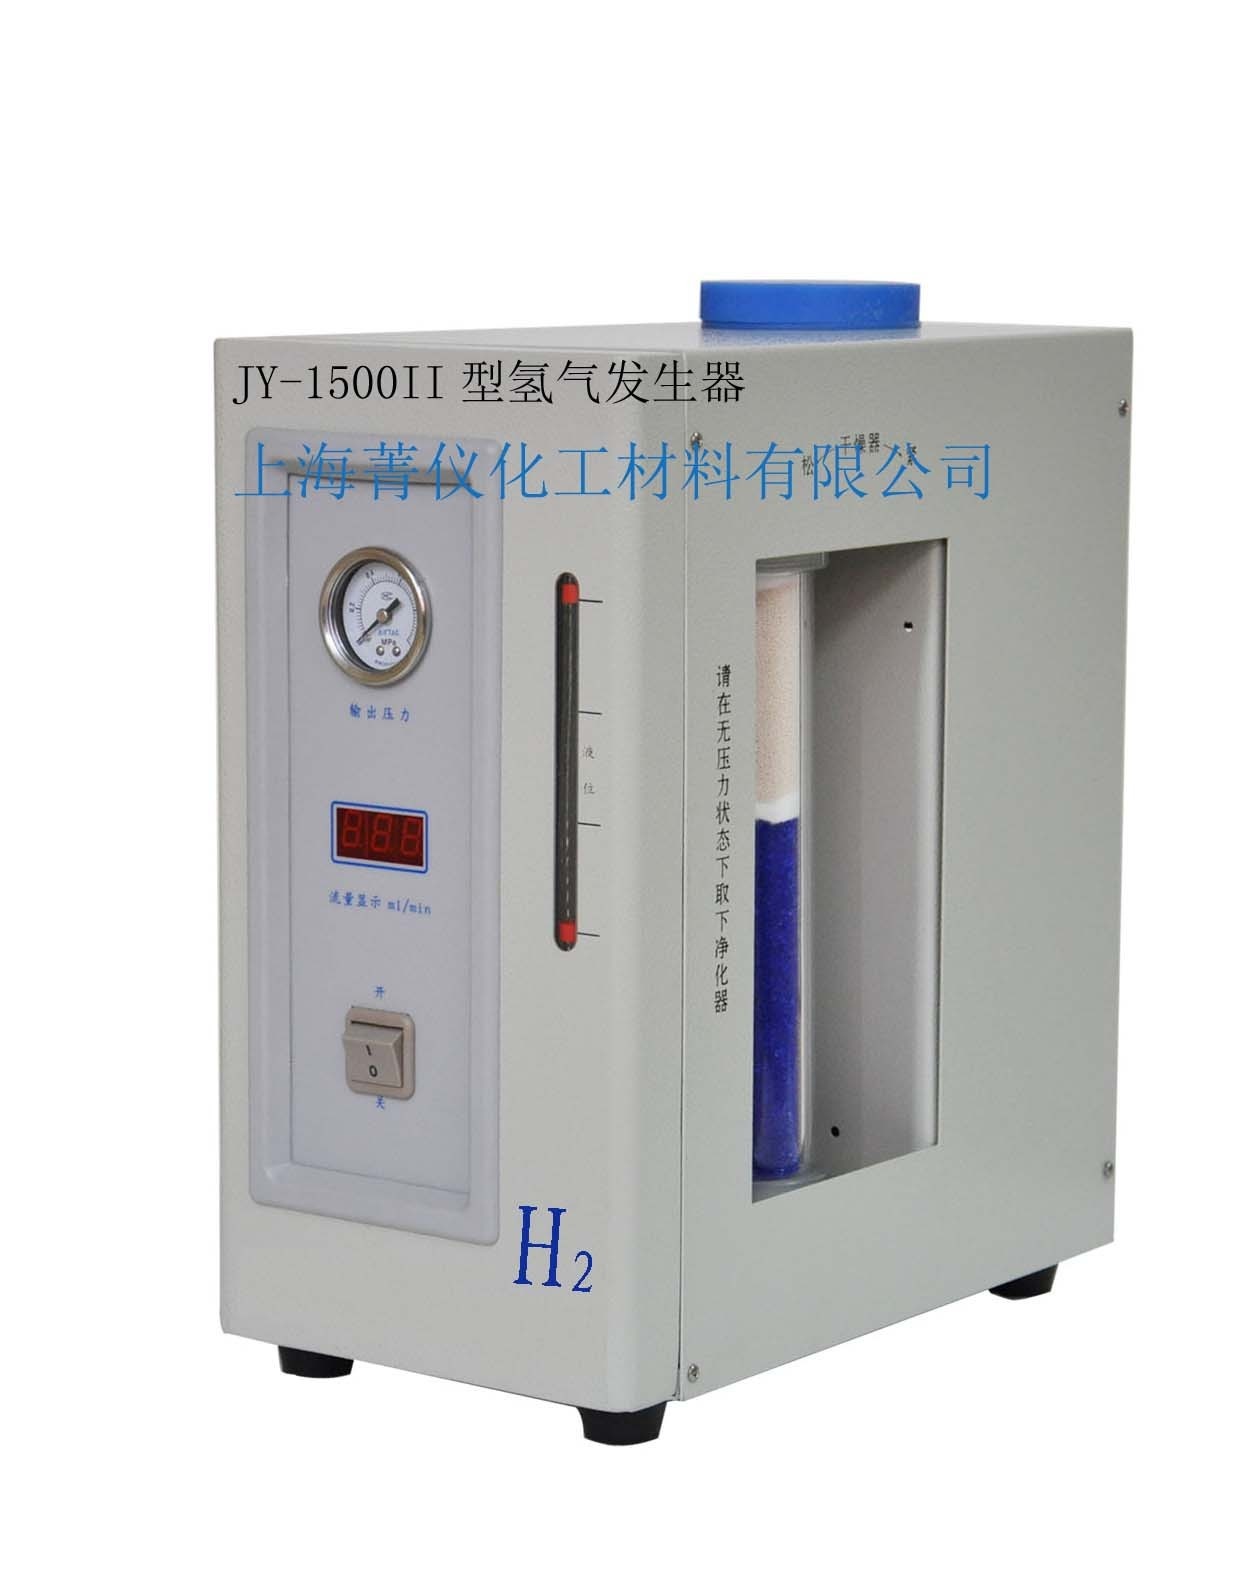 JY-1500II型氢气发生器的图片